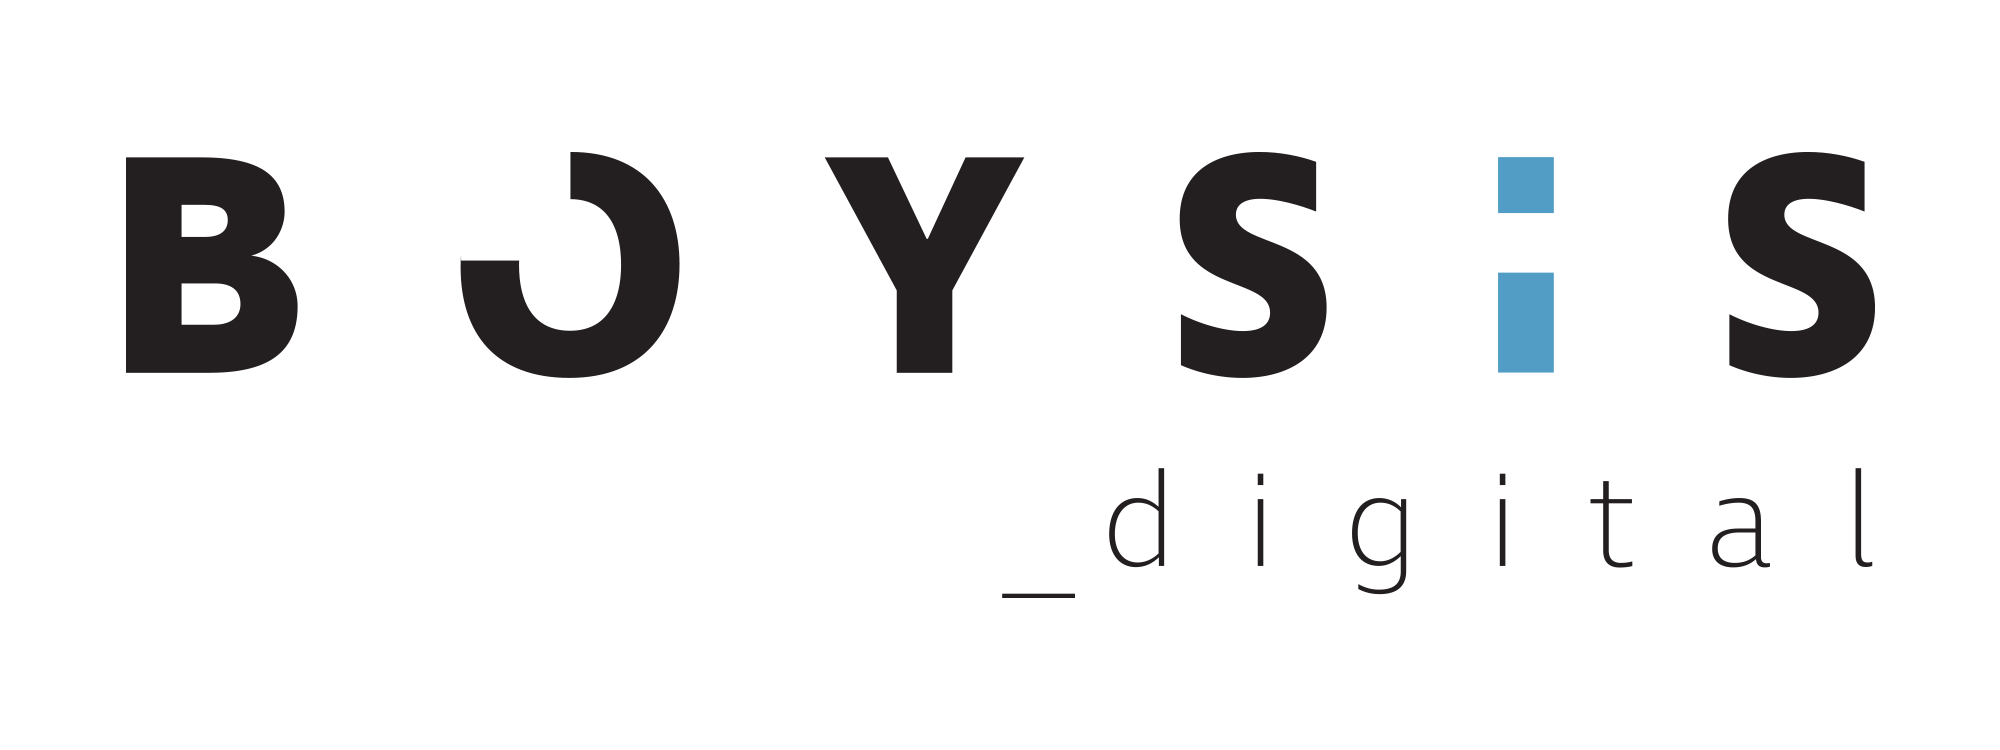 Boysis Digital